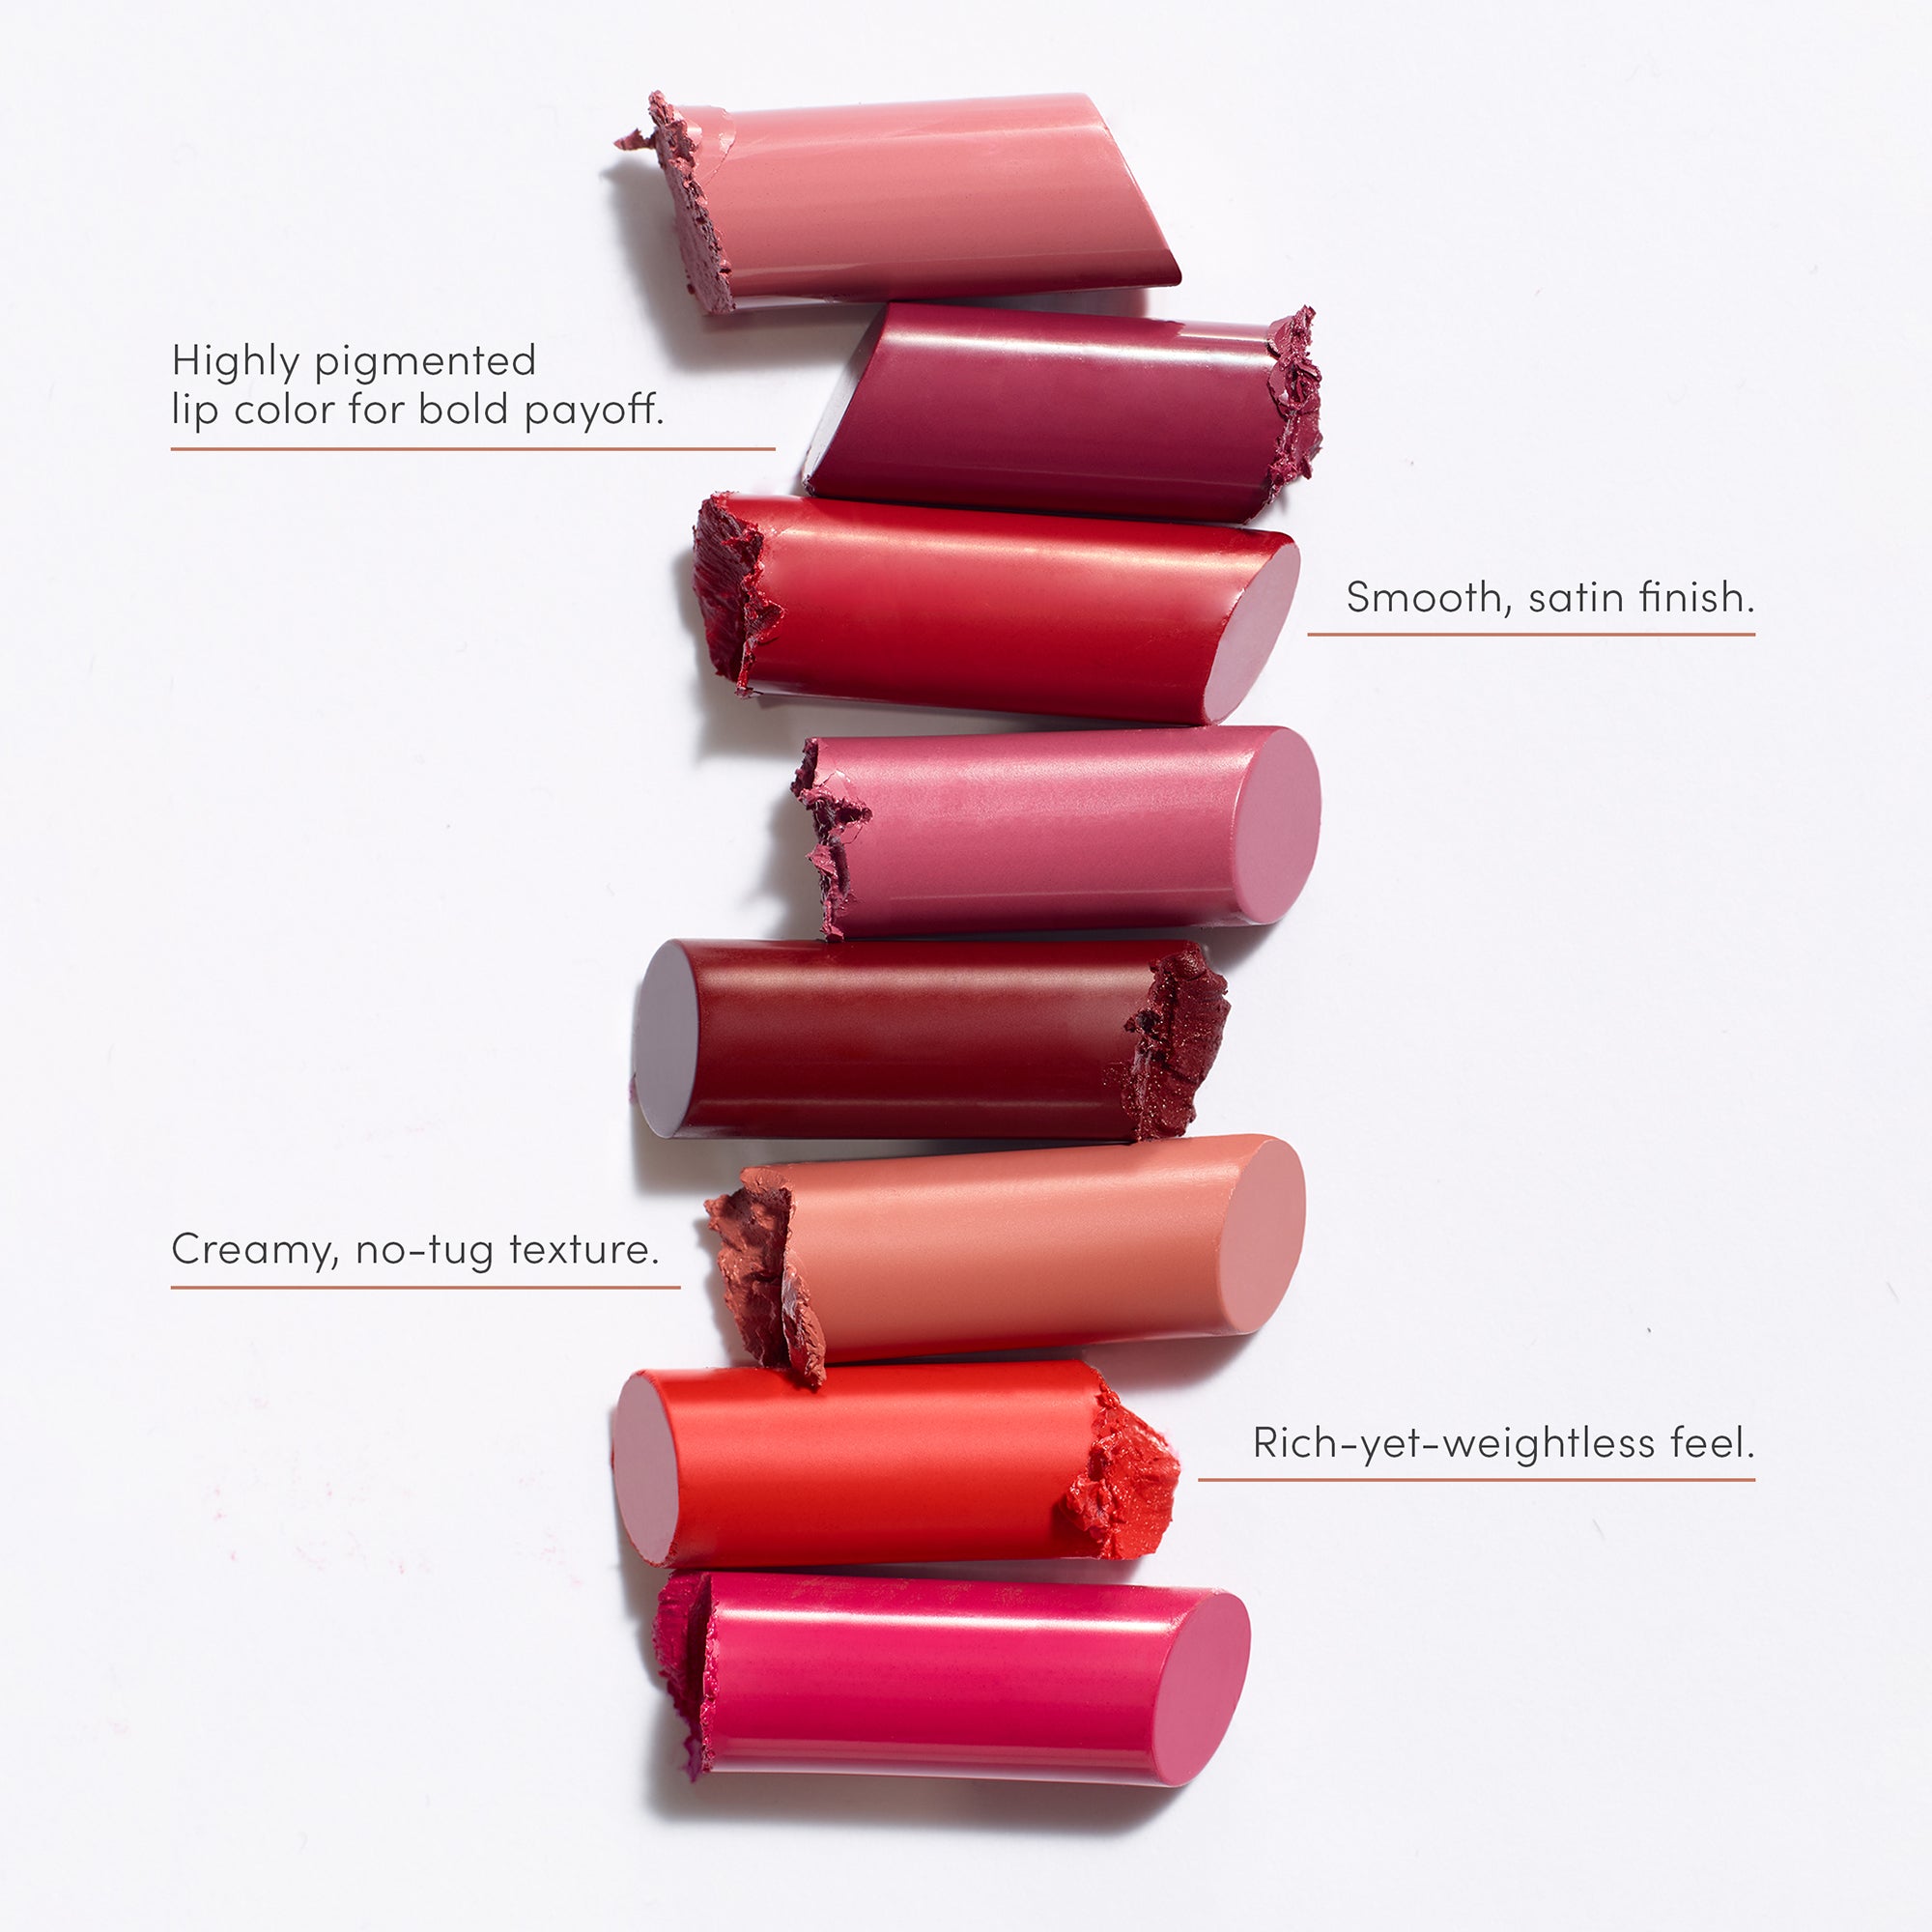 Jane Iredale ColorLuxe Hydrating Cream Lipstick / SORBET